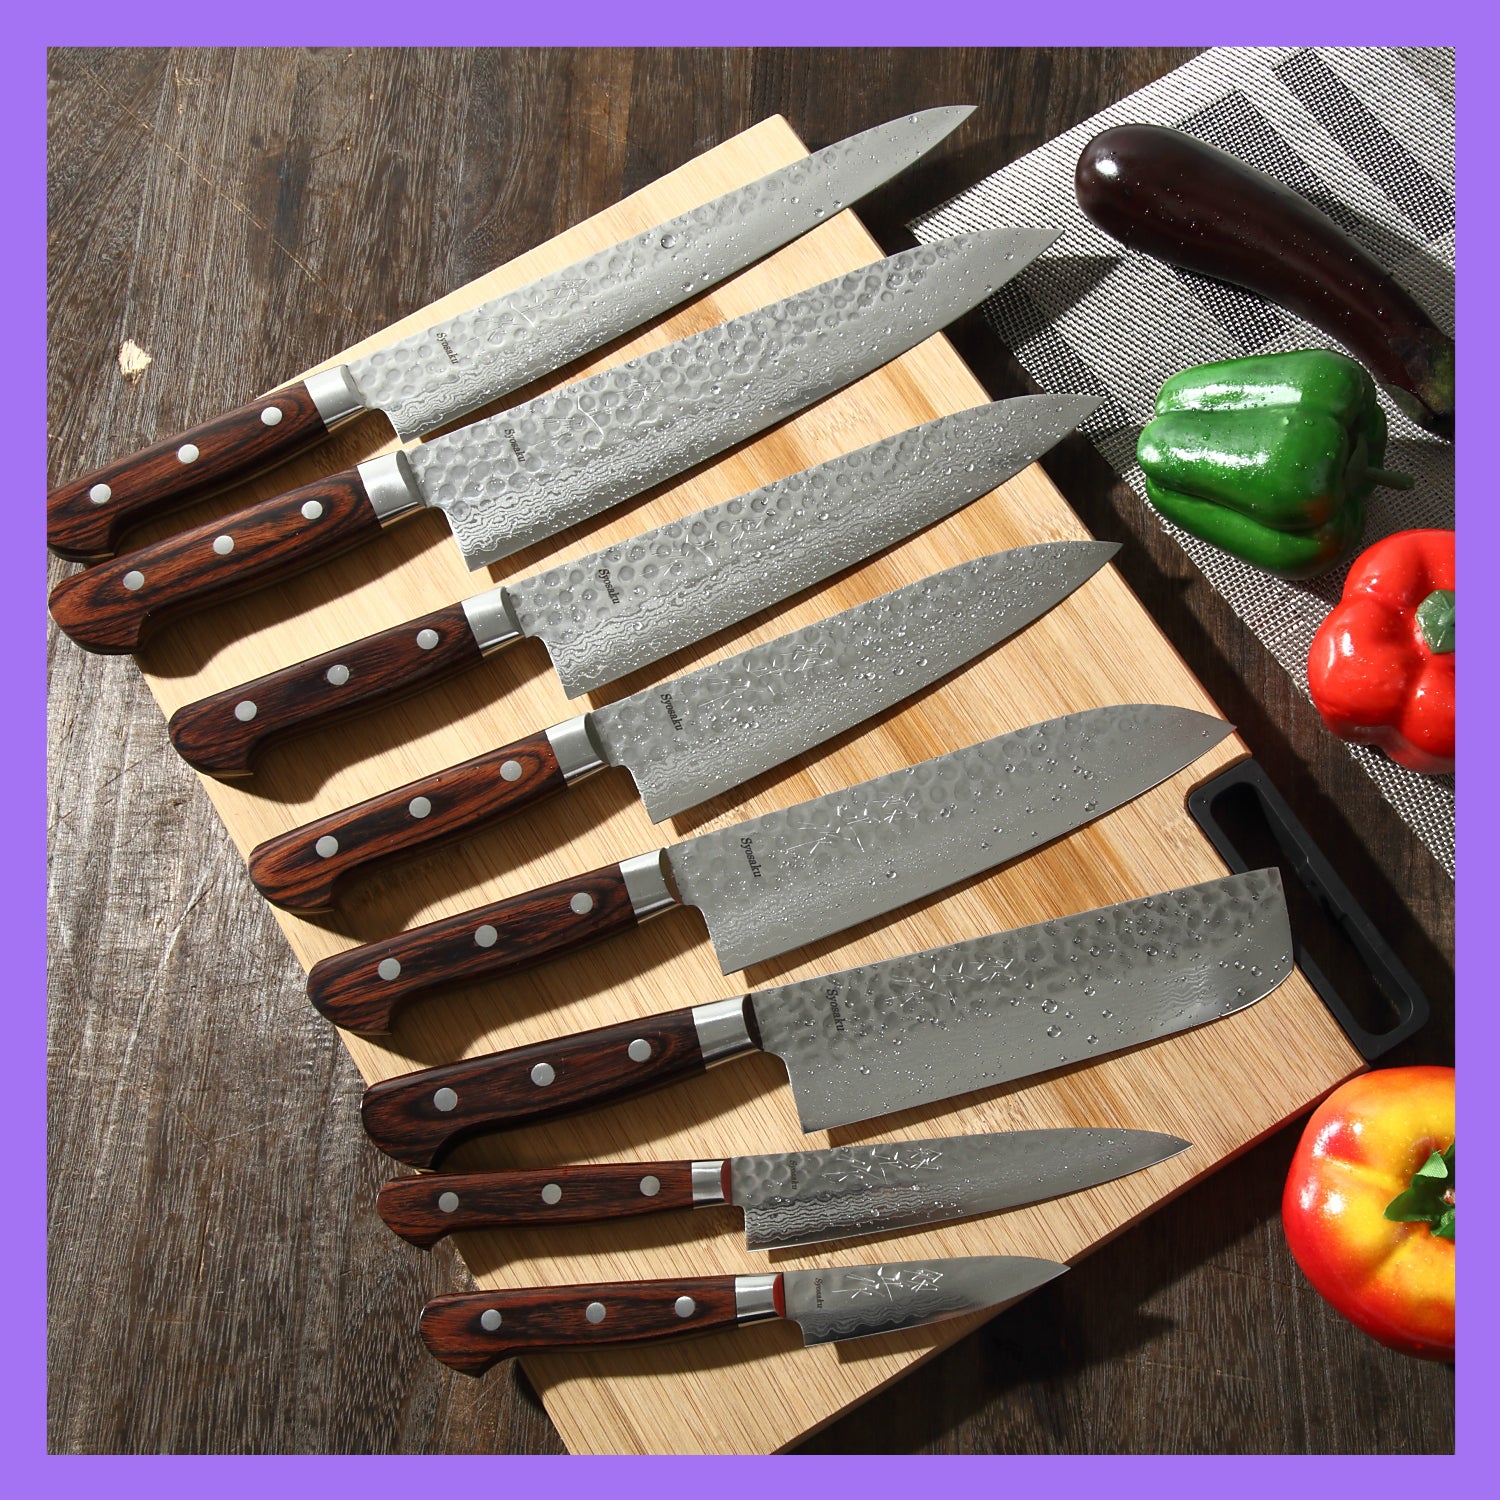 Syosaku Japanese Petty Best Sharp Kitchen Chef Knife Hammered Damascus VG-10 16 Layer Mahogany Handle, 5.3-inch (135mm) with Magnolia Sheath Saya - Syosaku-Japan